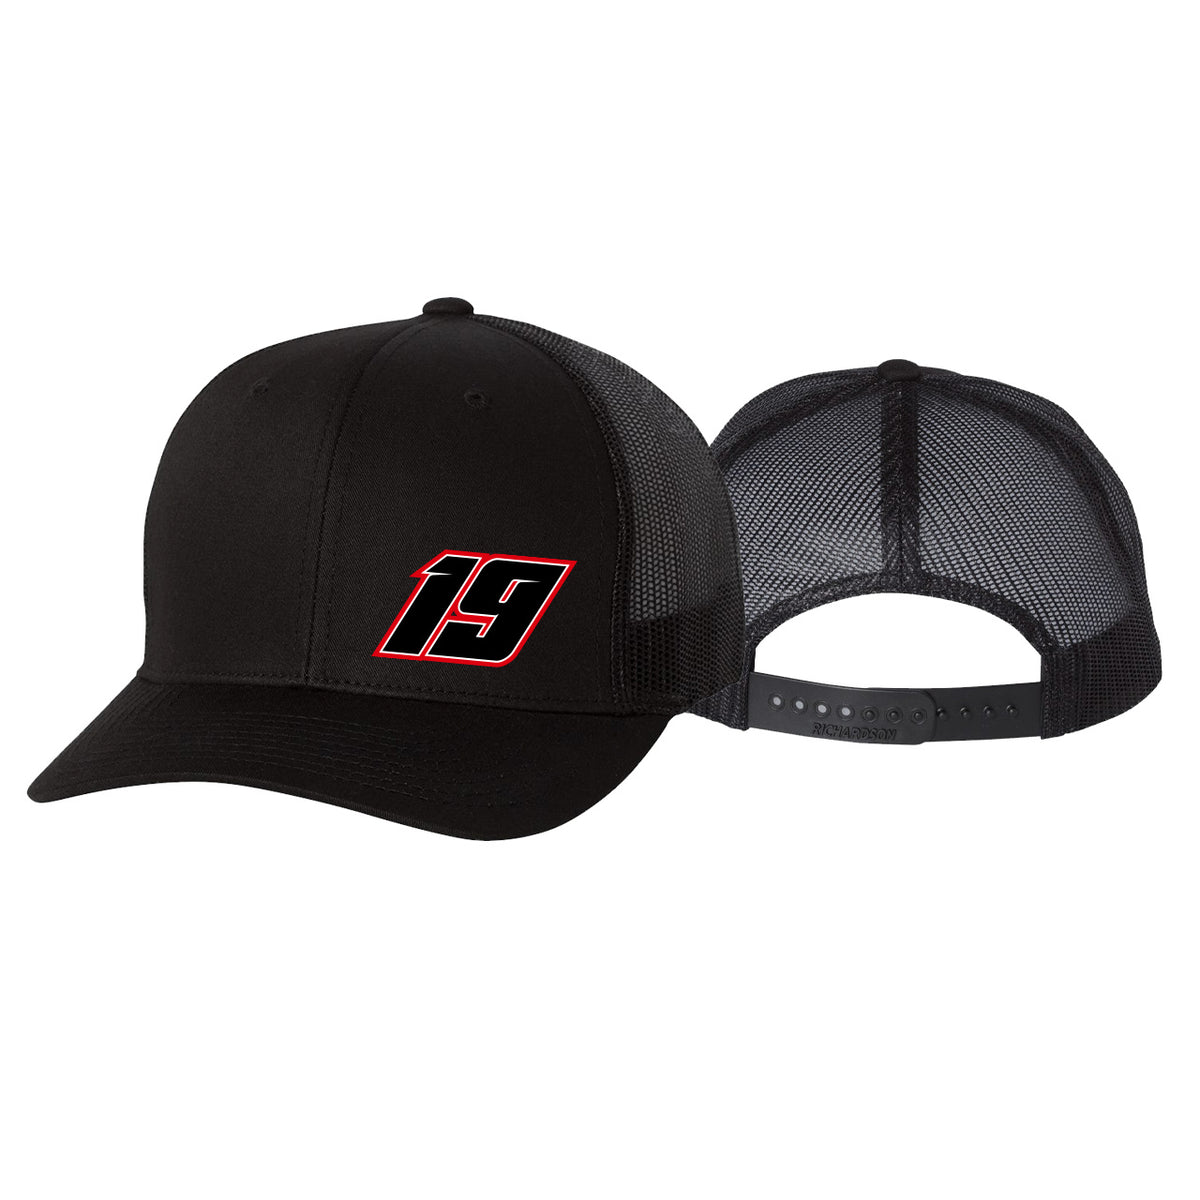 No. 19 Stitch Snapback Trucker Hat - Black – Brent Marks Store